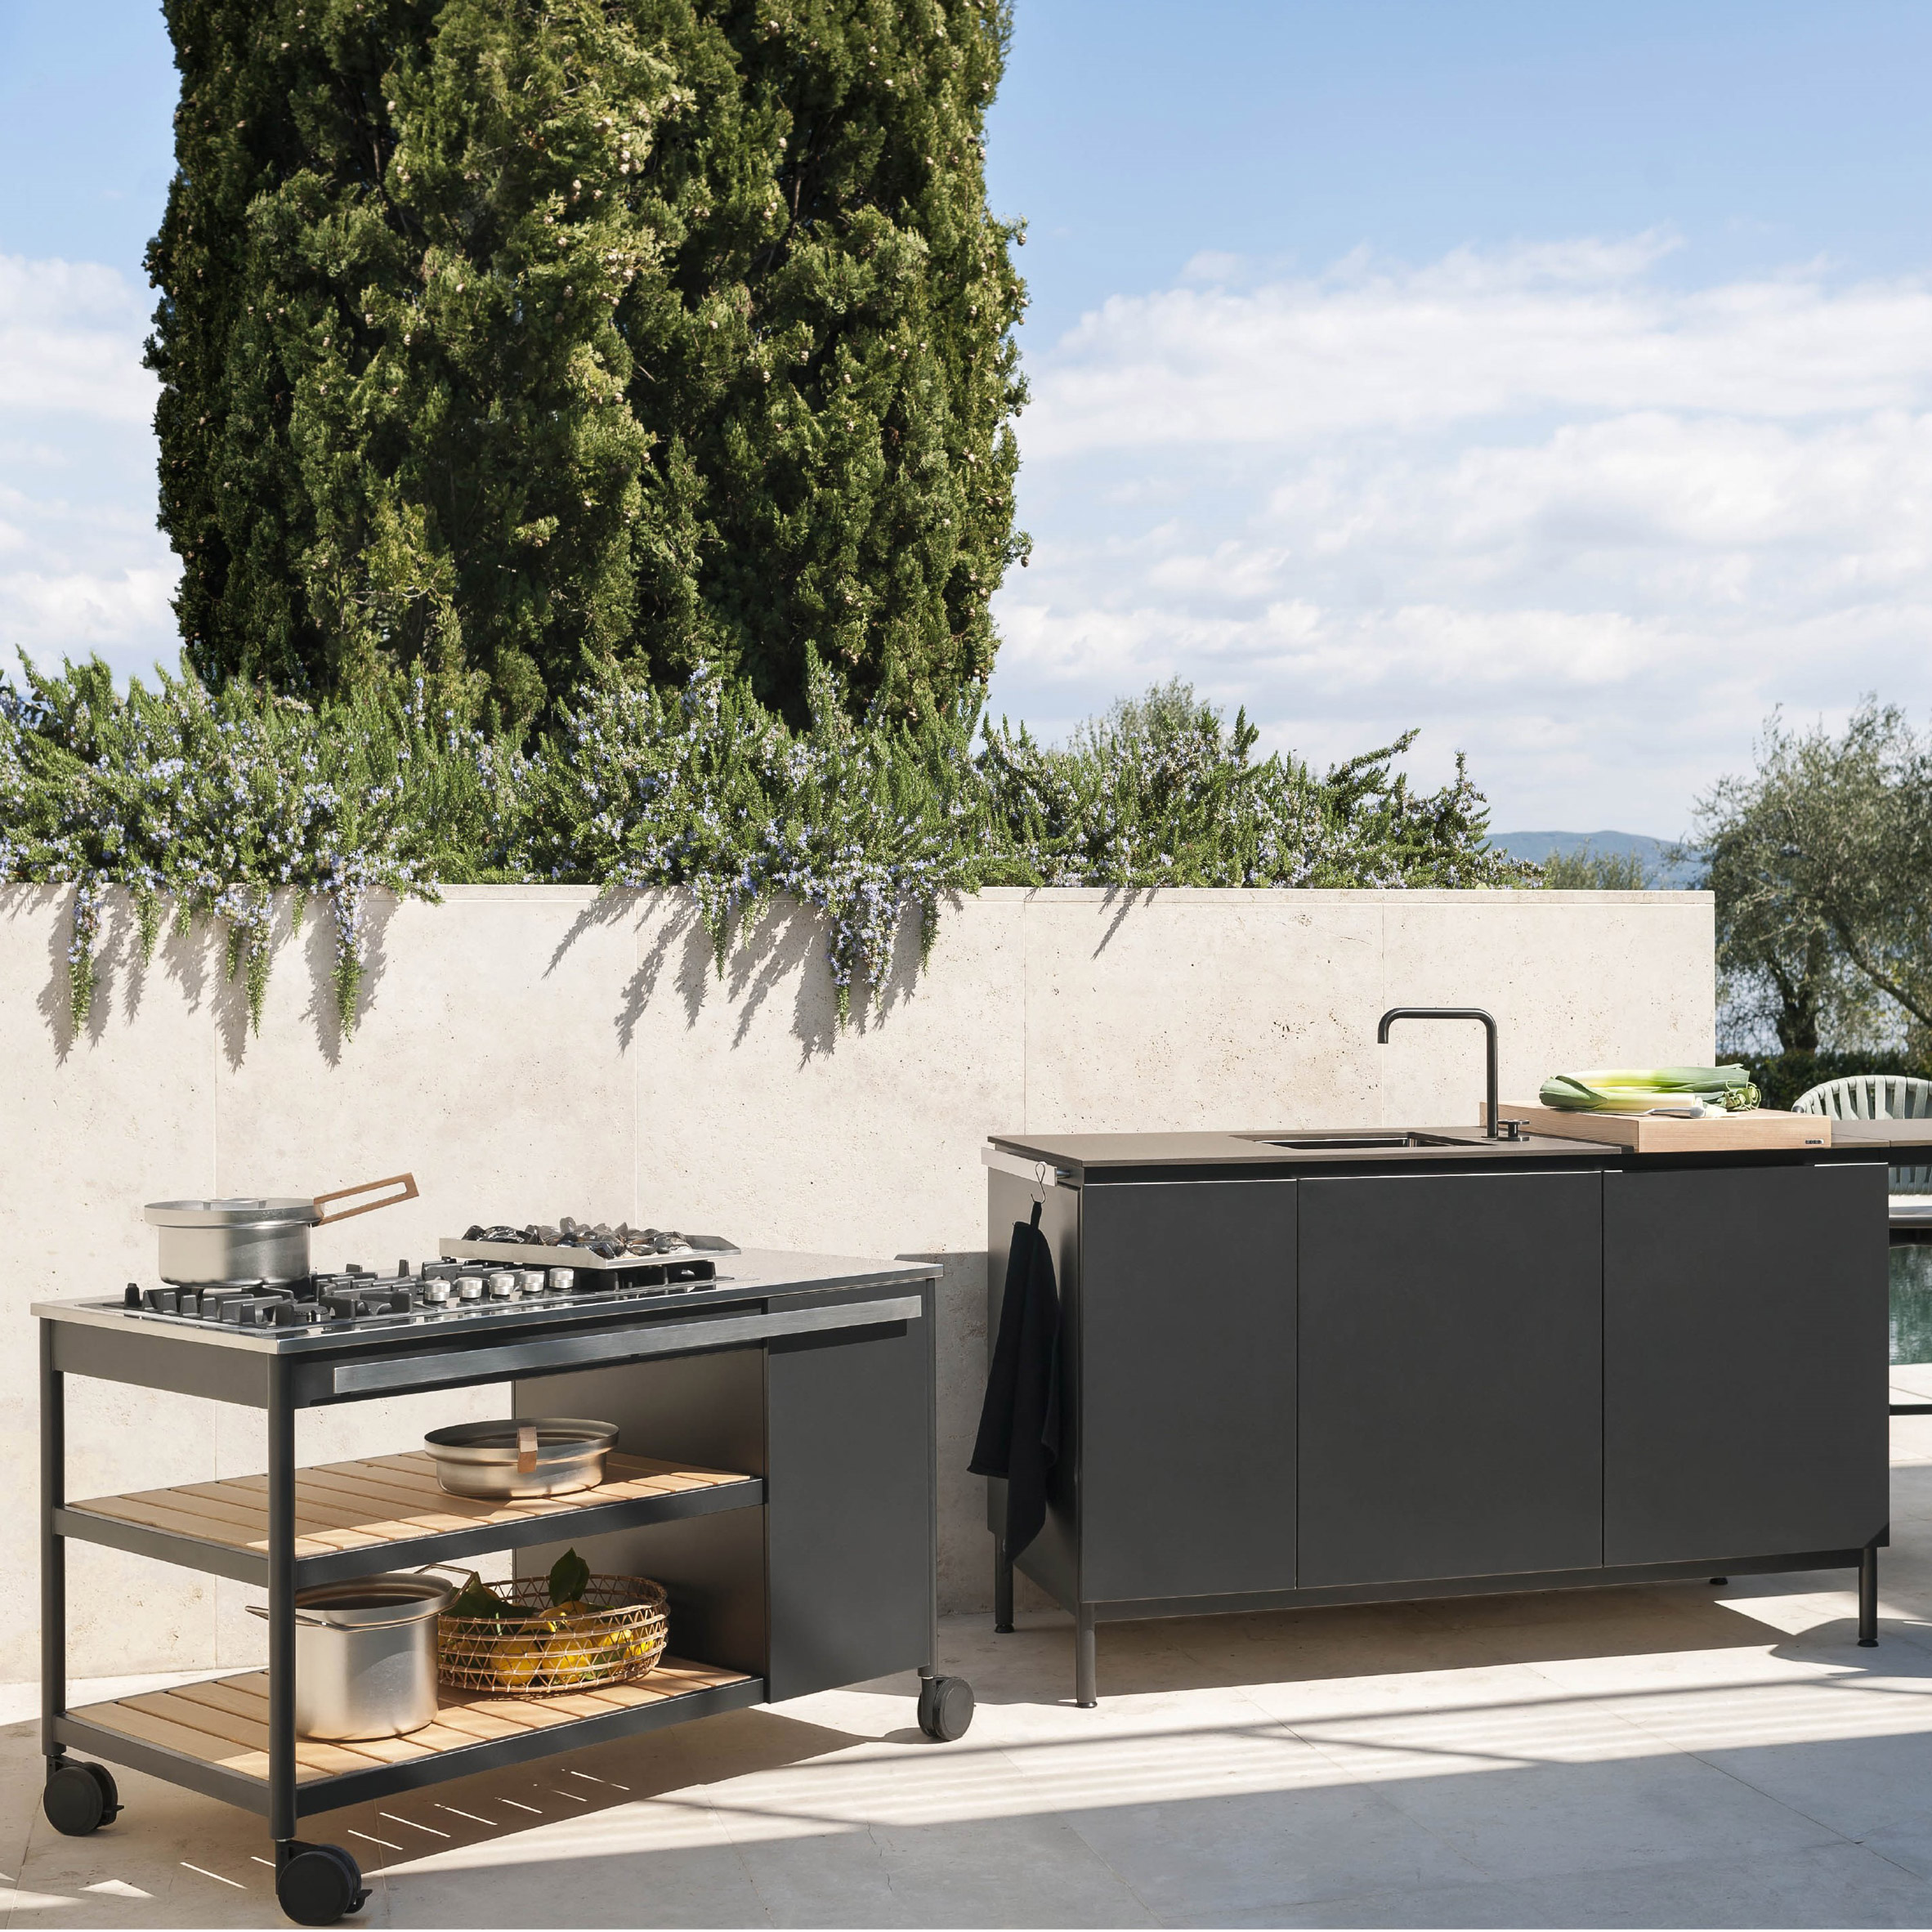 Norma outdoor kitchen by Rodolfo Dordoni for Roda